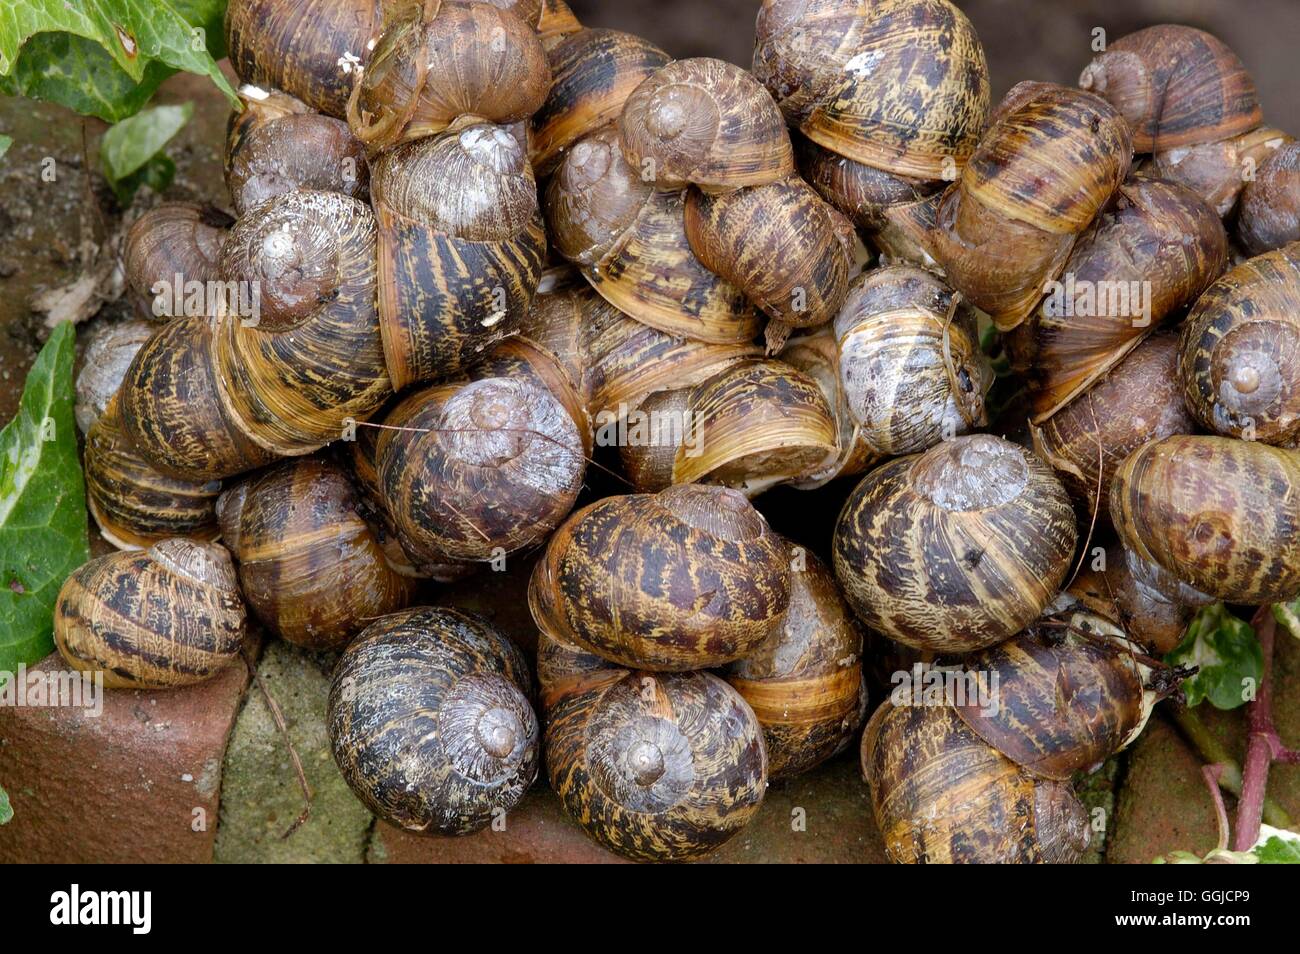 Snails- - (Helix aspera)   MIW250440 Stock Photo